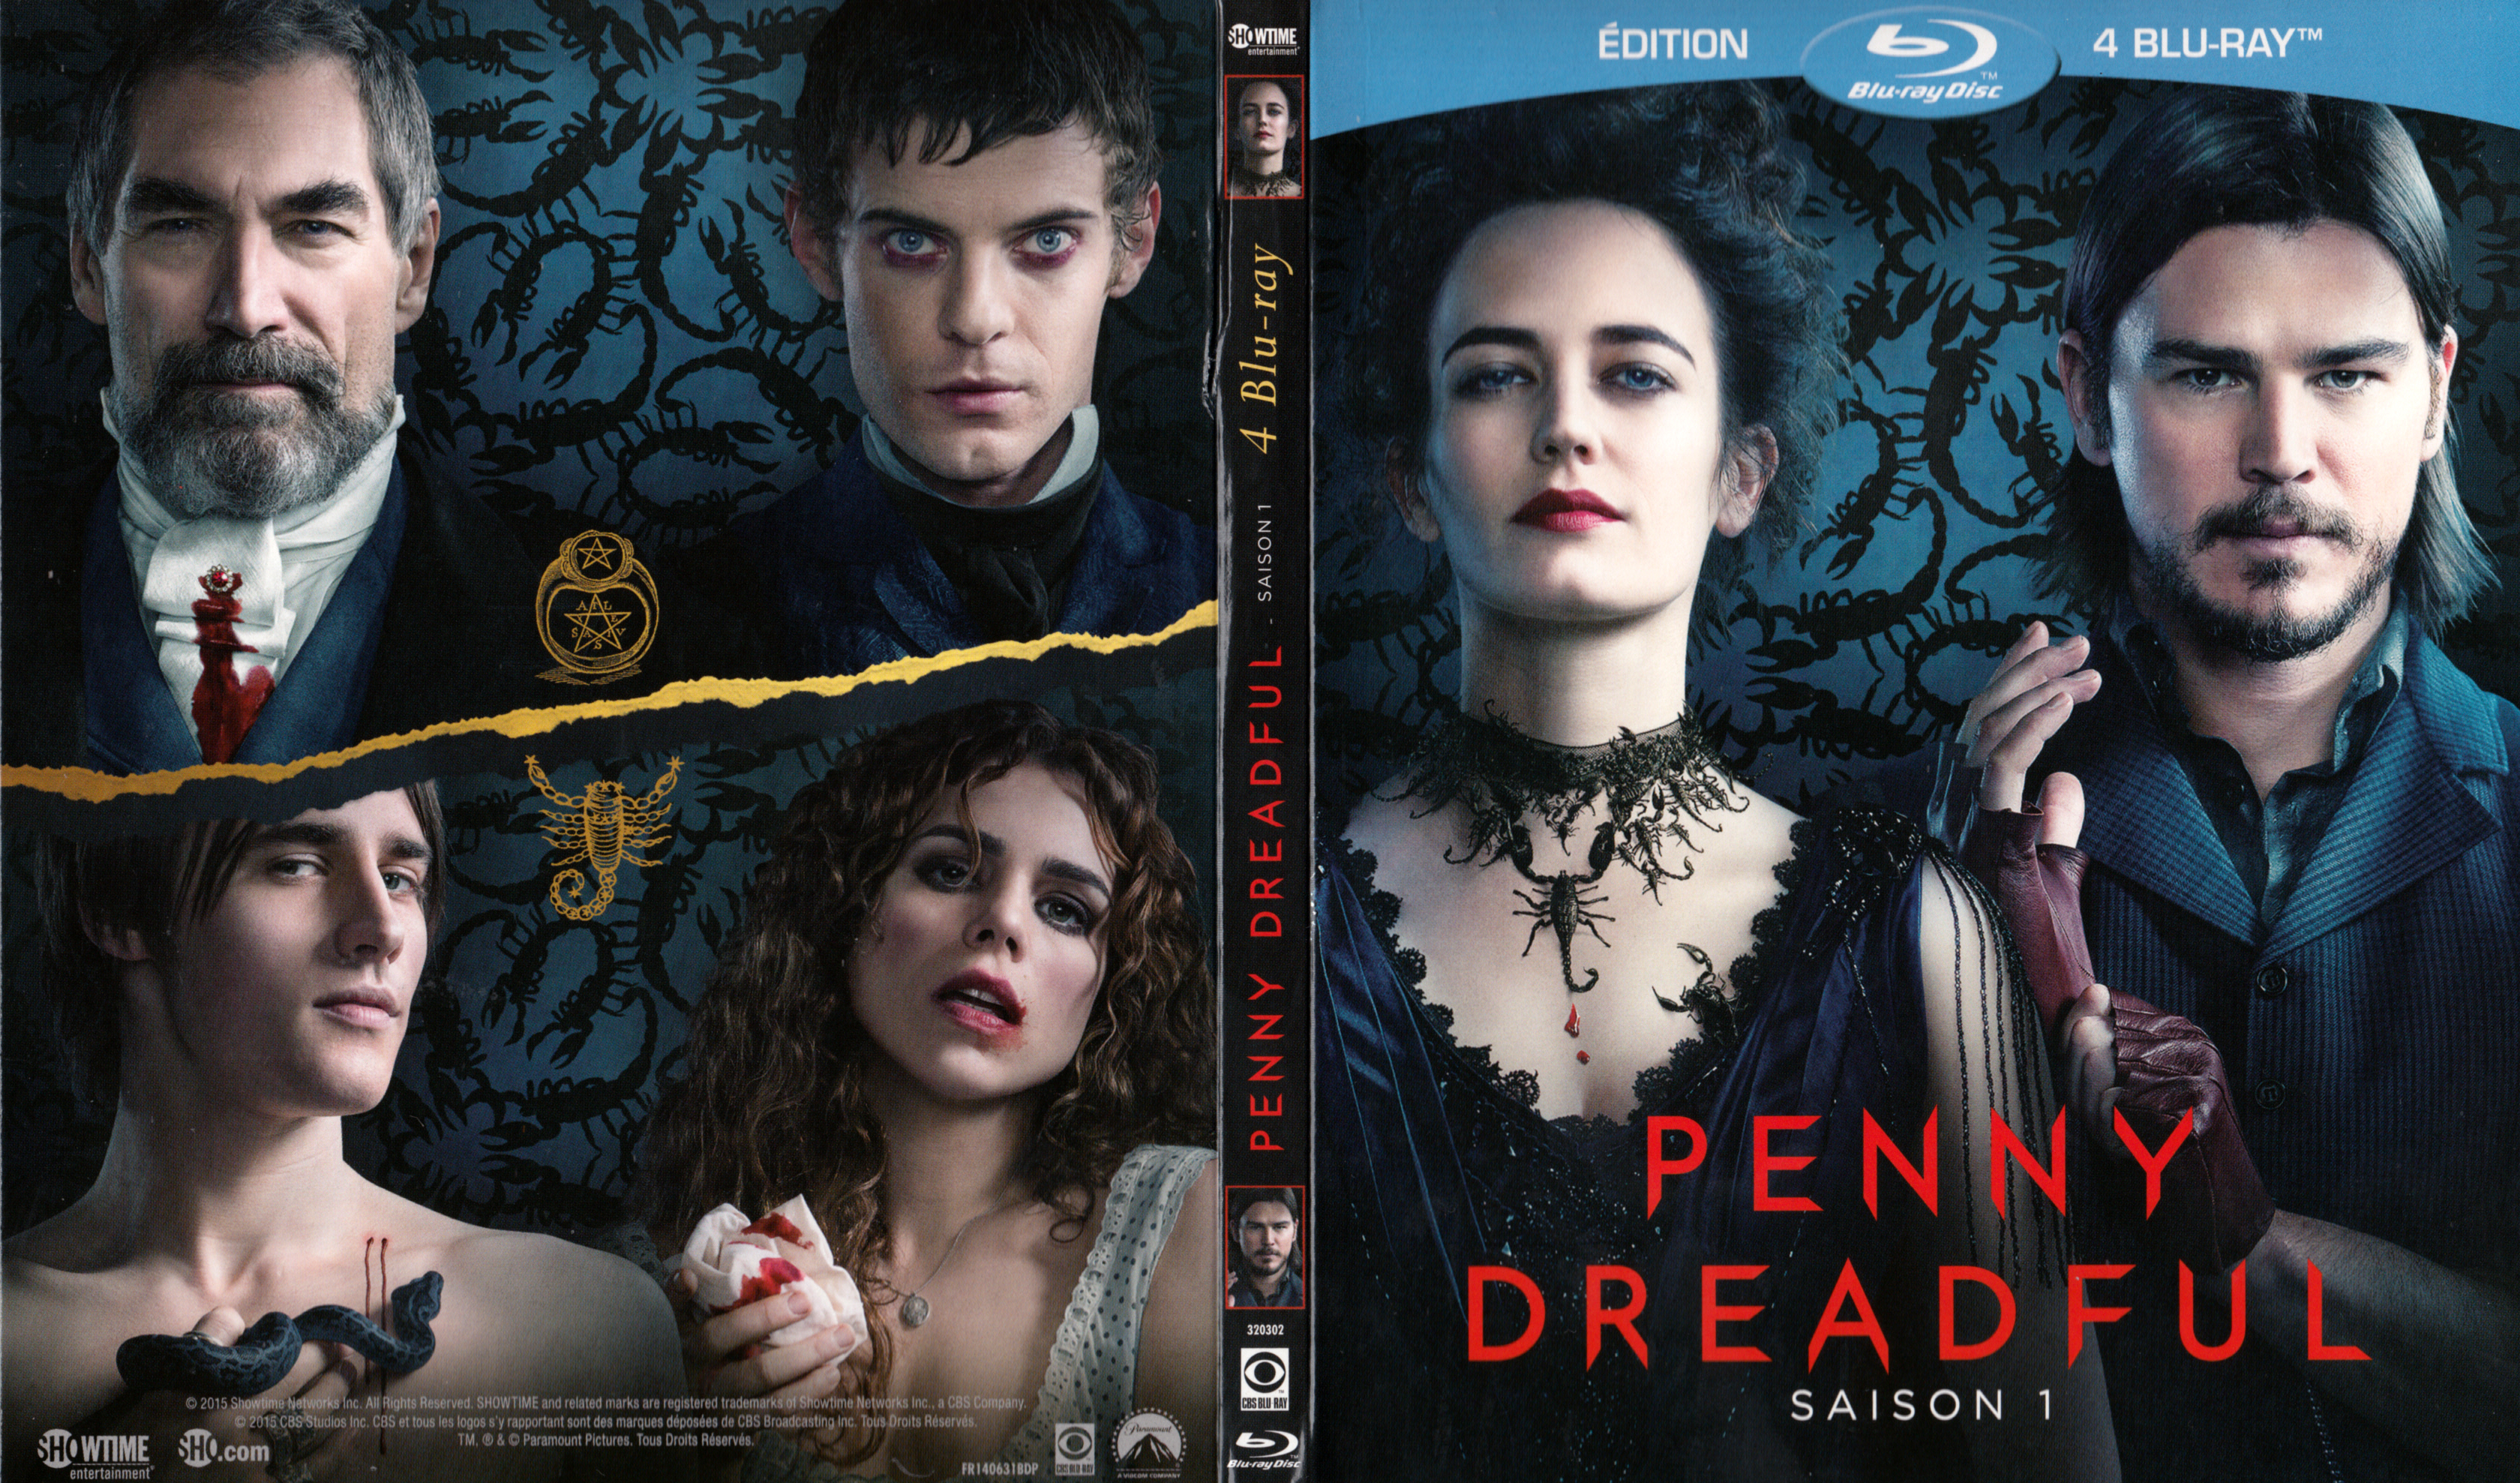 Jaquette DVD Penny Dreadful Saison 1 (BLU-RAY) v2